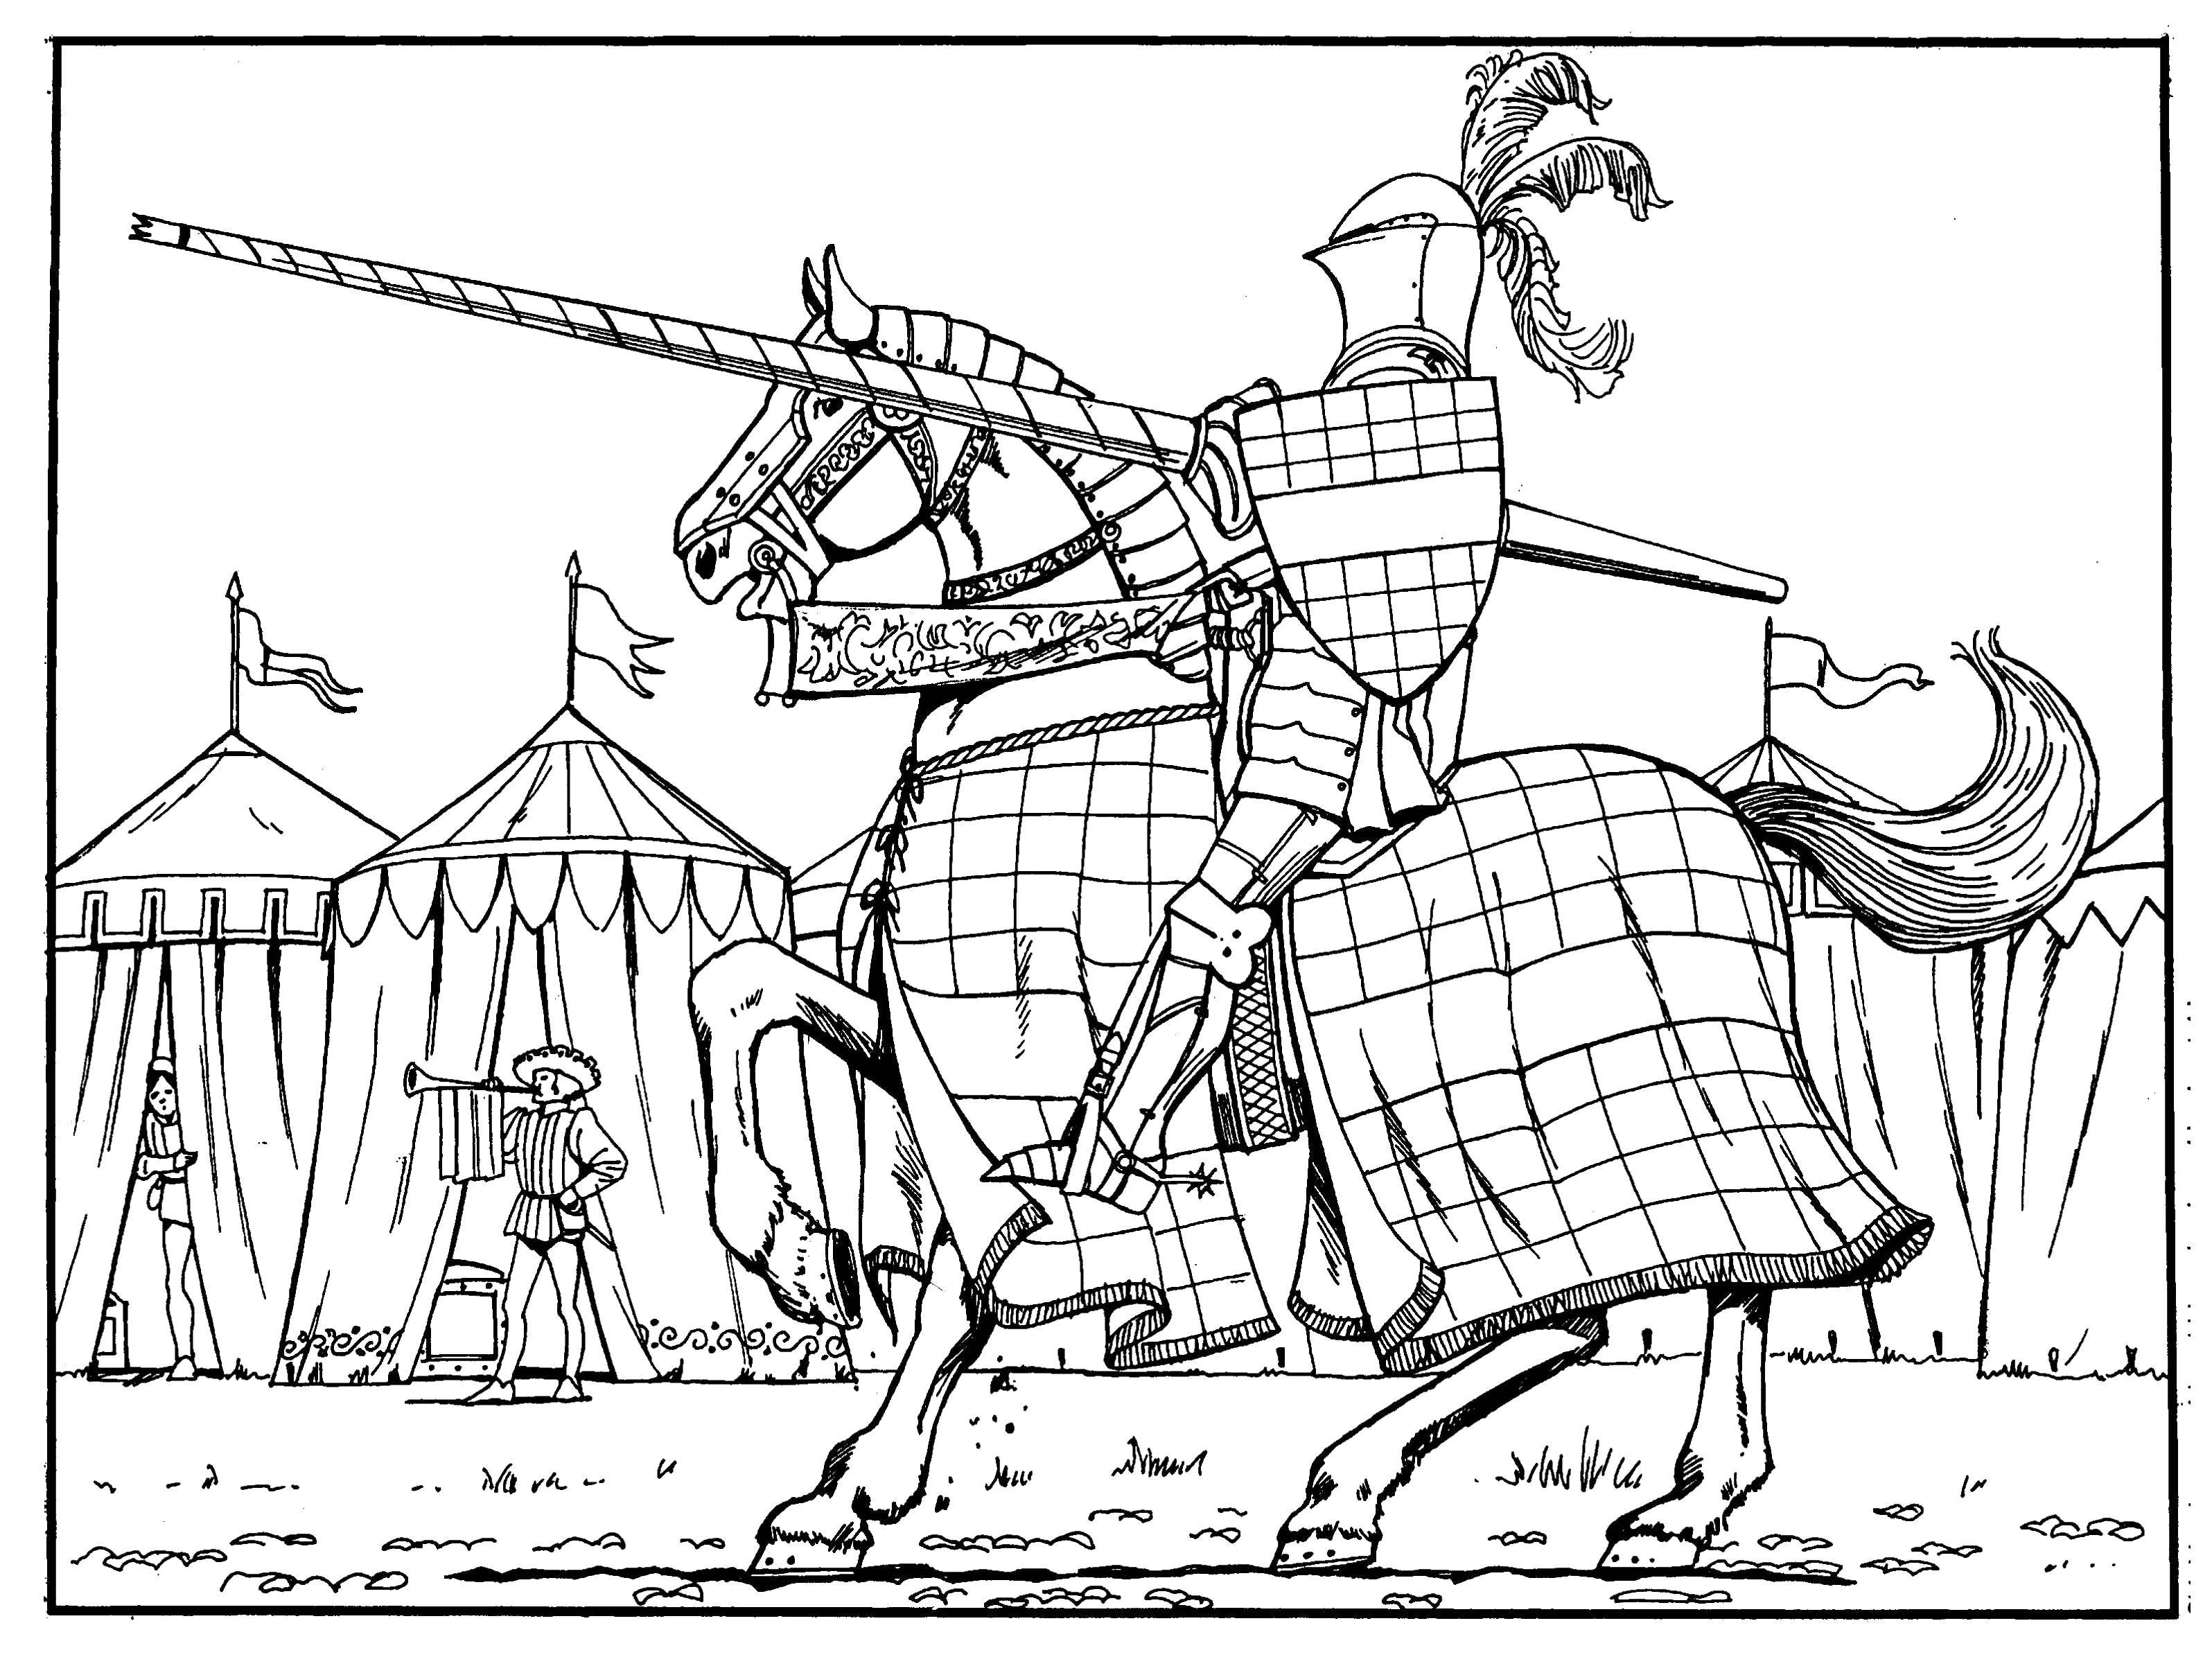 Coloring Knight on horseback. Category Knights . Tags:  knights, horses, horses.